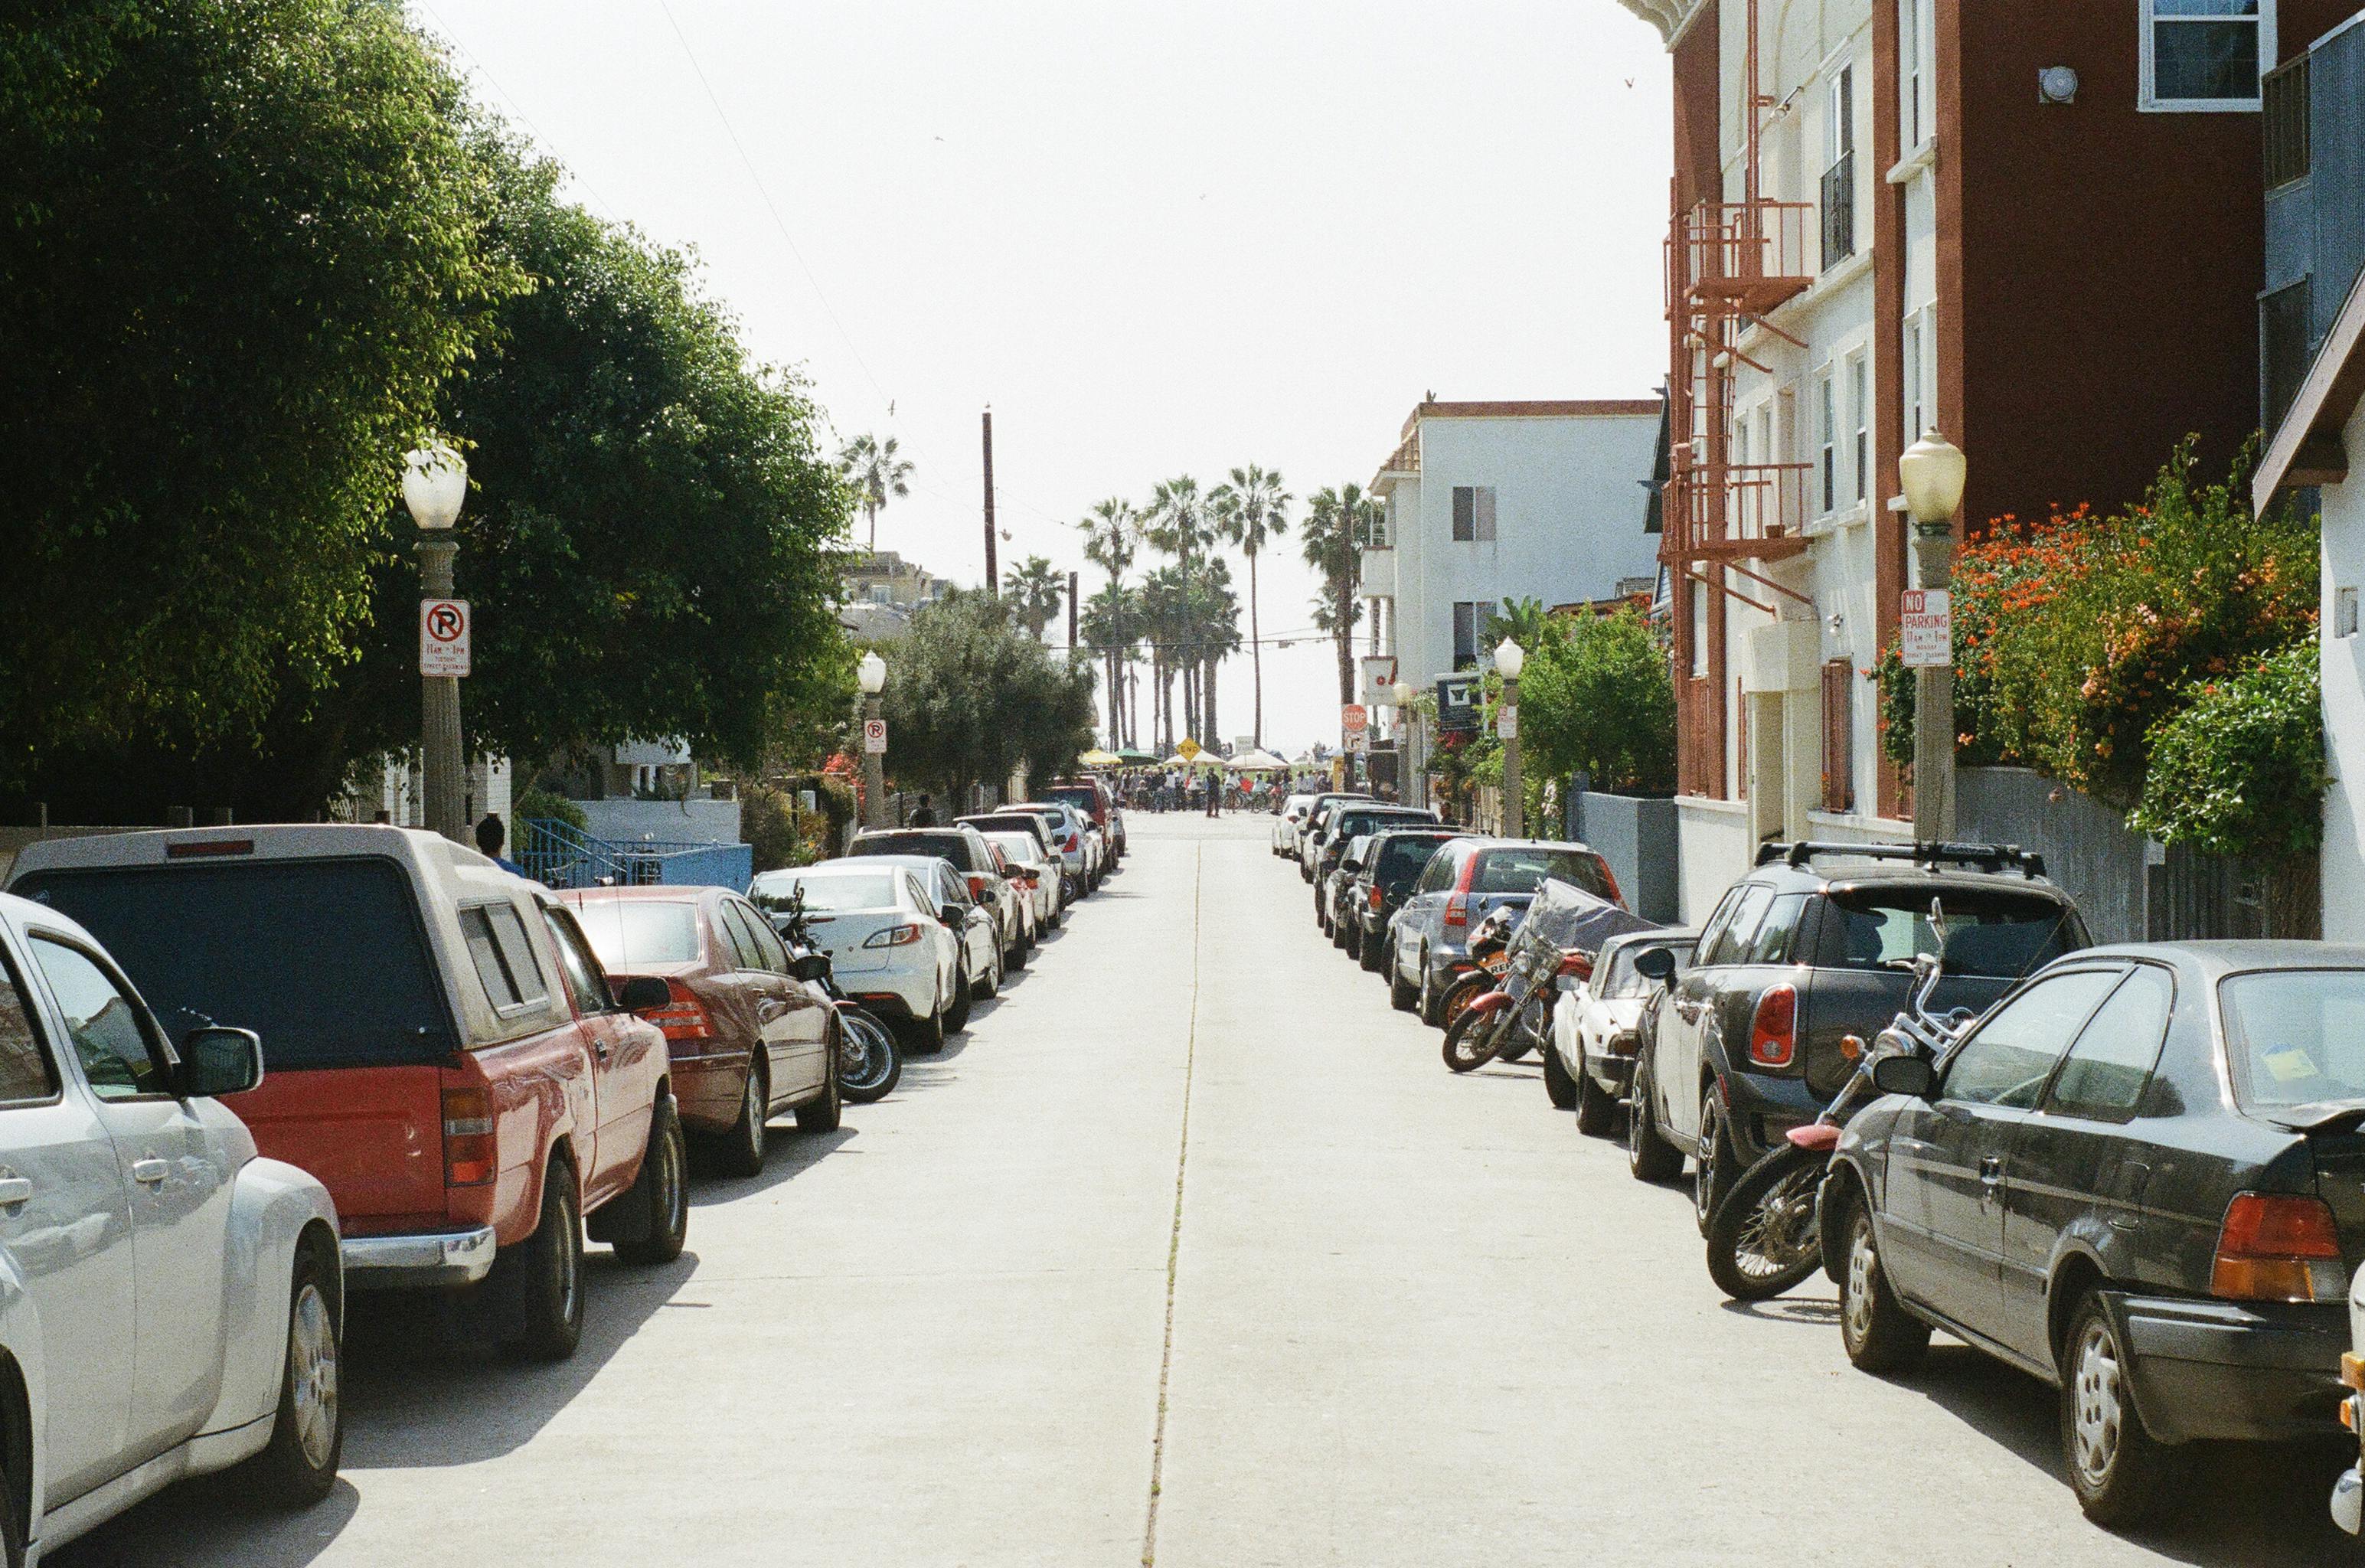 Street parking